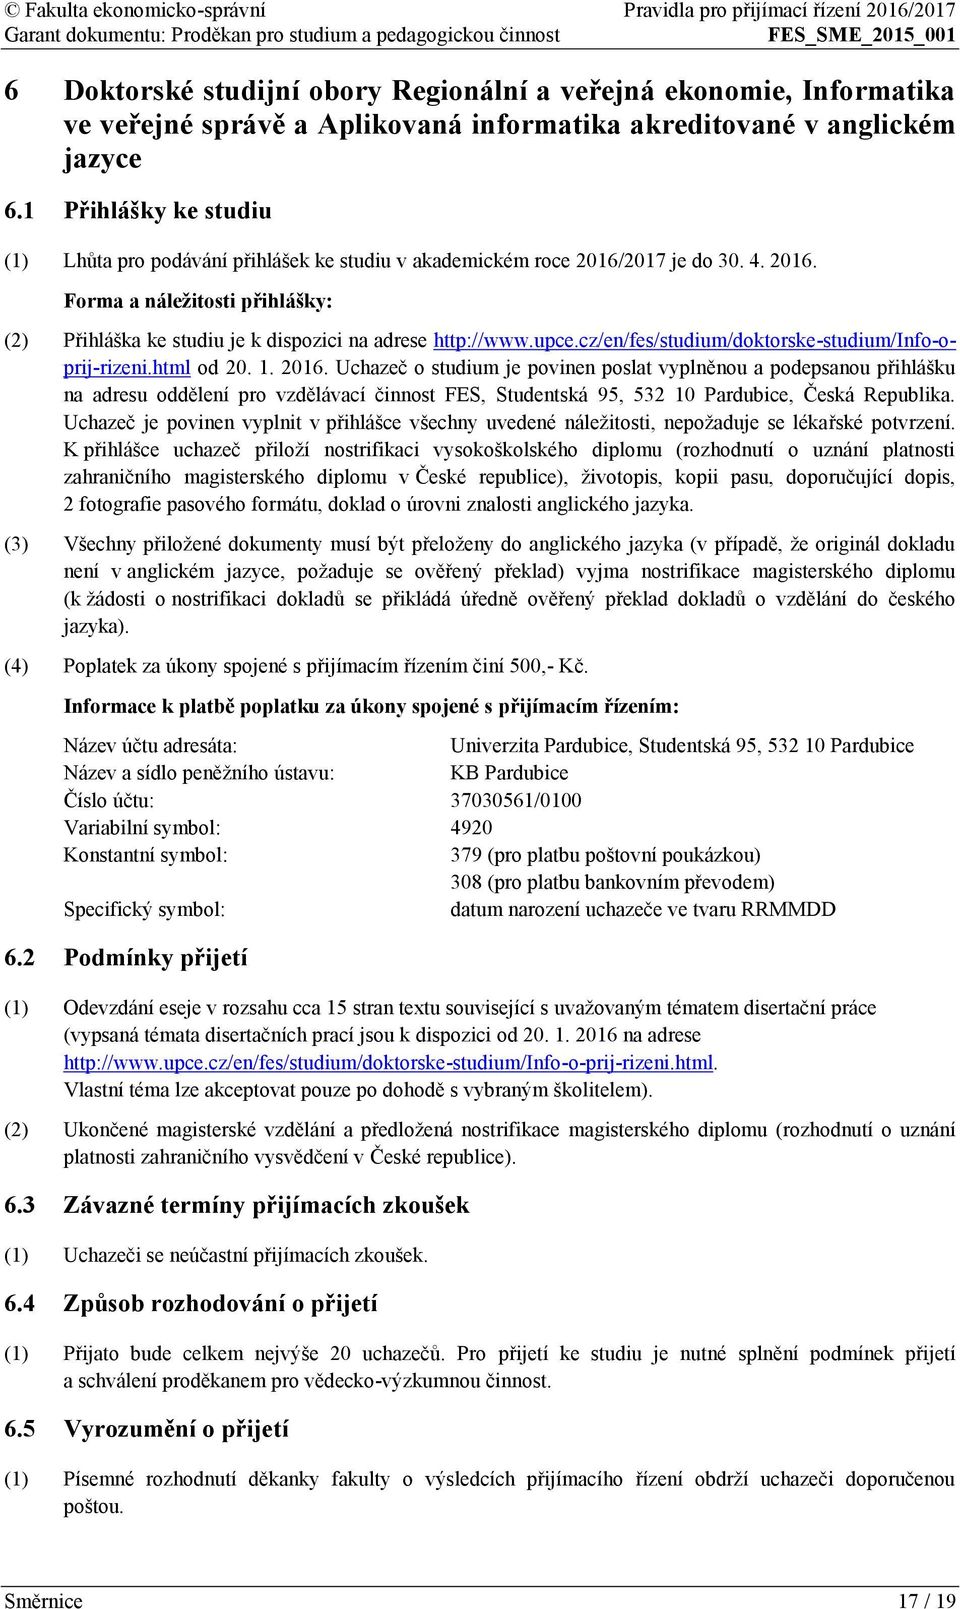 upce.cz/en/fes/studium/doktorske-studium/info-oprij-rizeni.html od 20. 1. 2016.